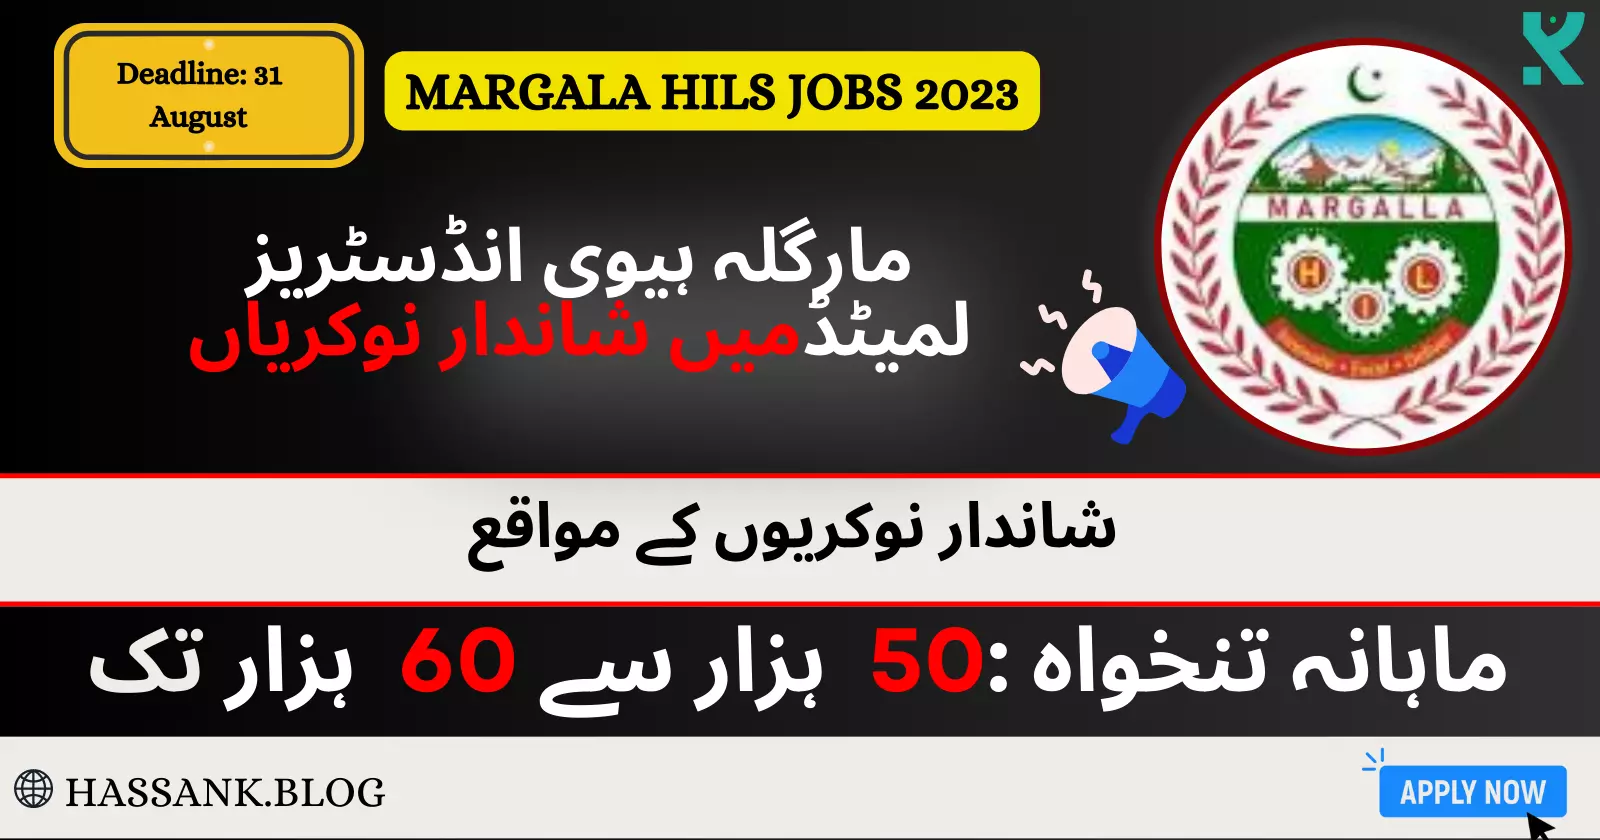 Apply Online for Margalla Heavy Industries Ltd Jobs